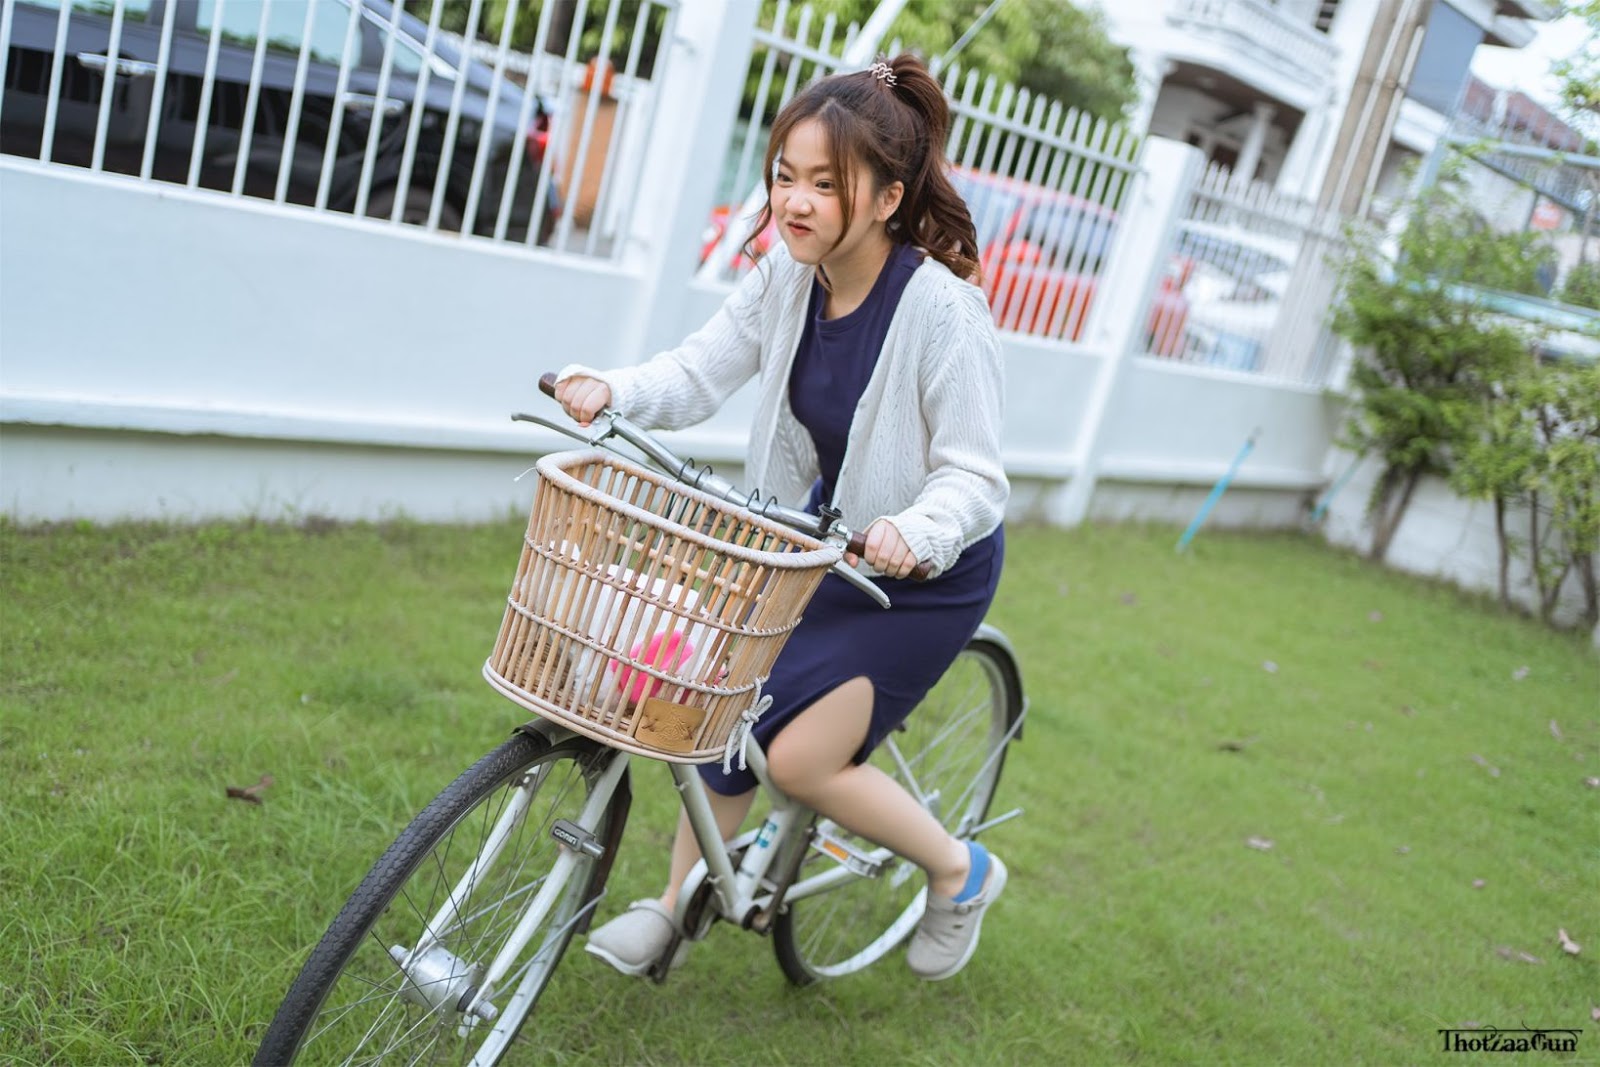 Cutest Thailand model - Kamonravee Korsampan (Aueyauey เอ๋ยเอ้ย) - How to drive a bike - TruePic.net